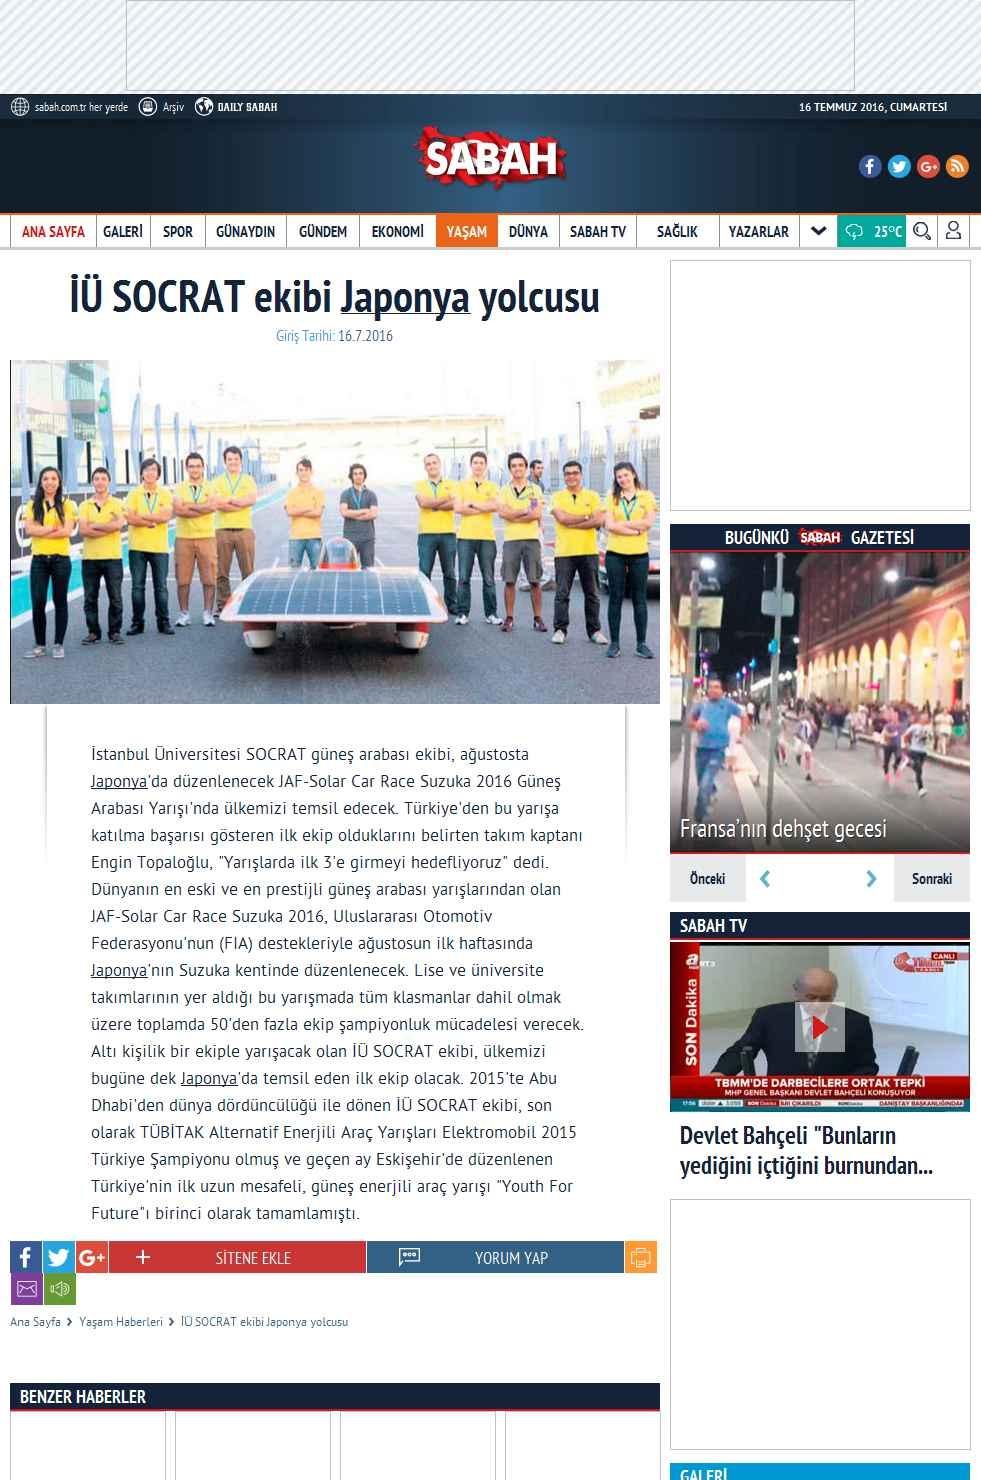 Portal Adres IÜ SOCRAT EKIBI JAPONYA YOLCUSU : www.sabah.com.